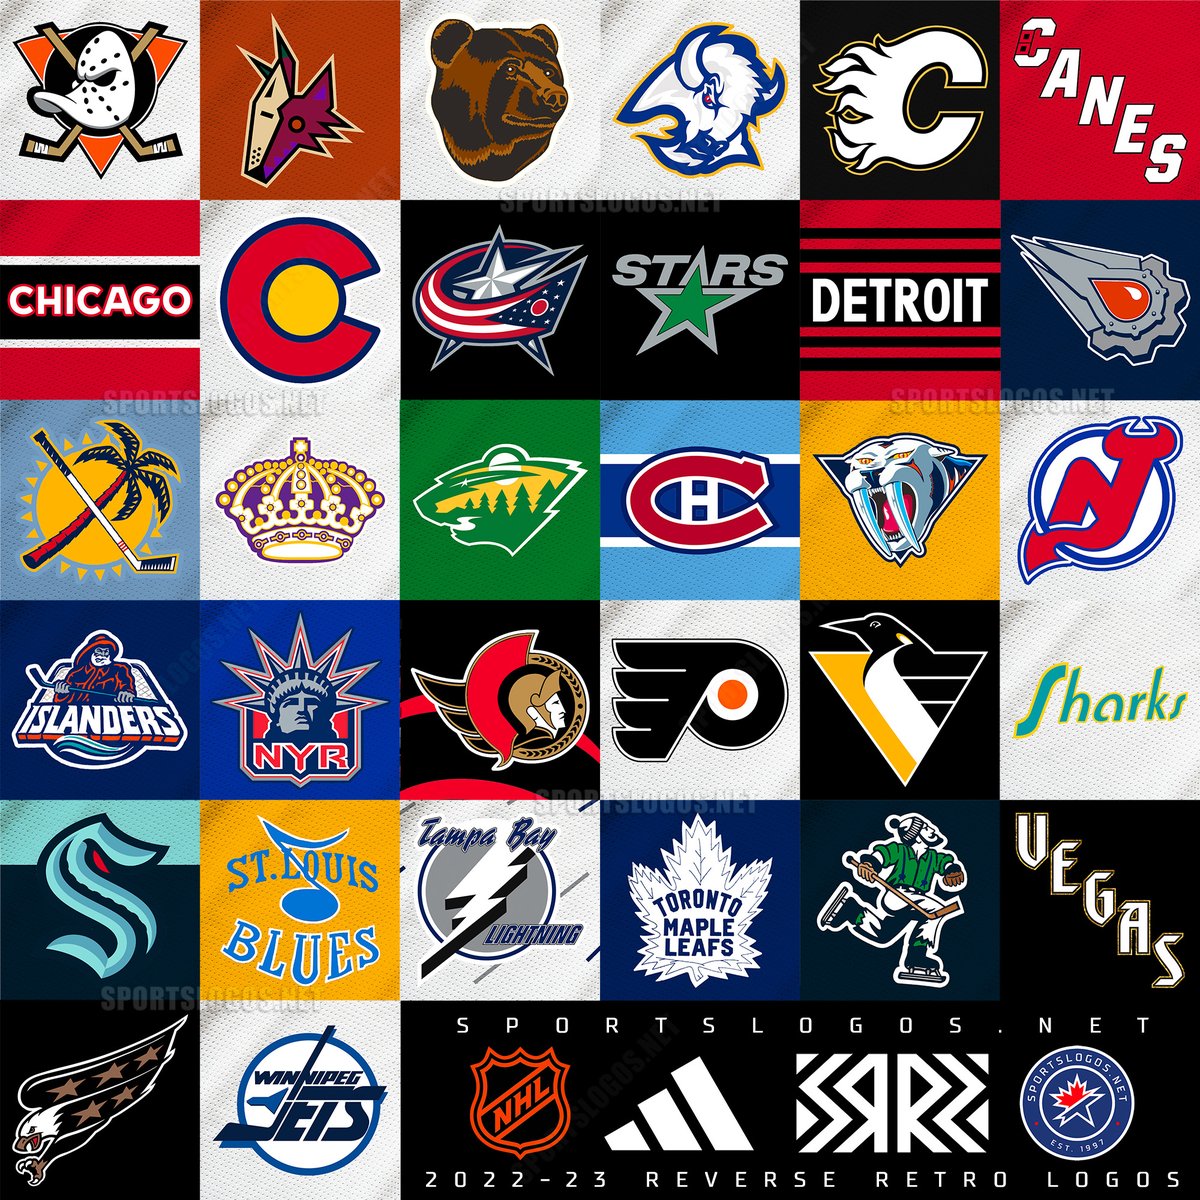 Chris Creamer  SportsLogos.Net on X: The all-new 2022-23 #NHL